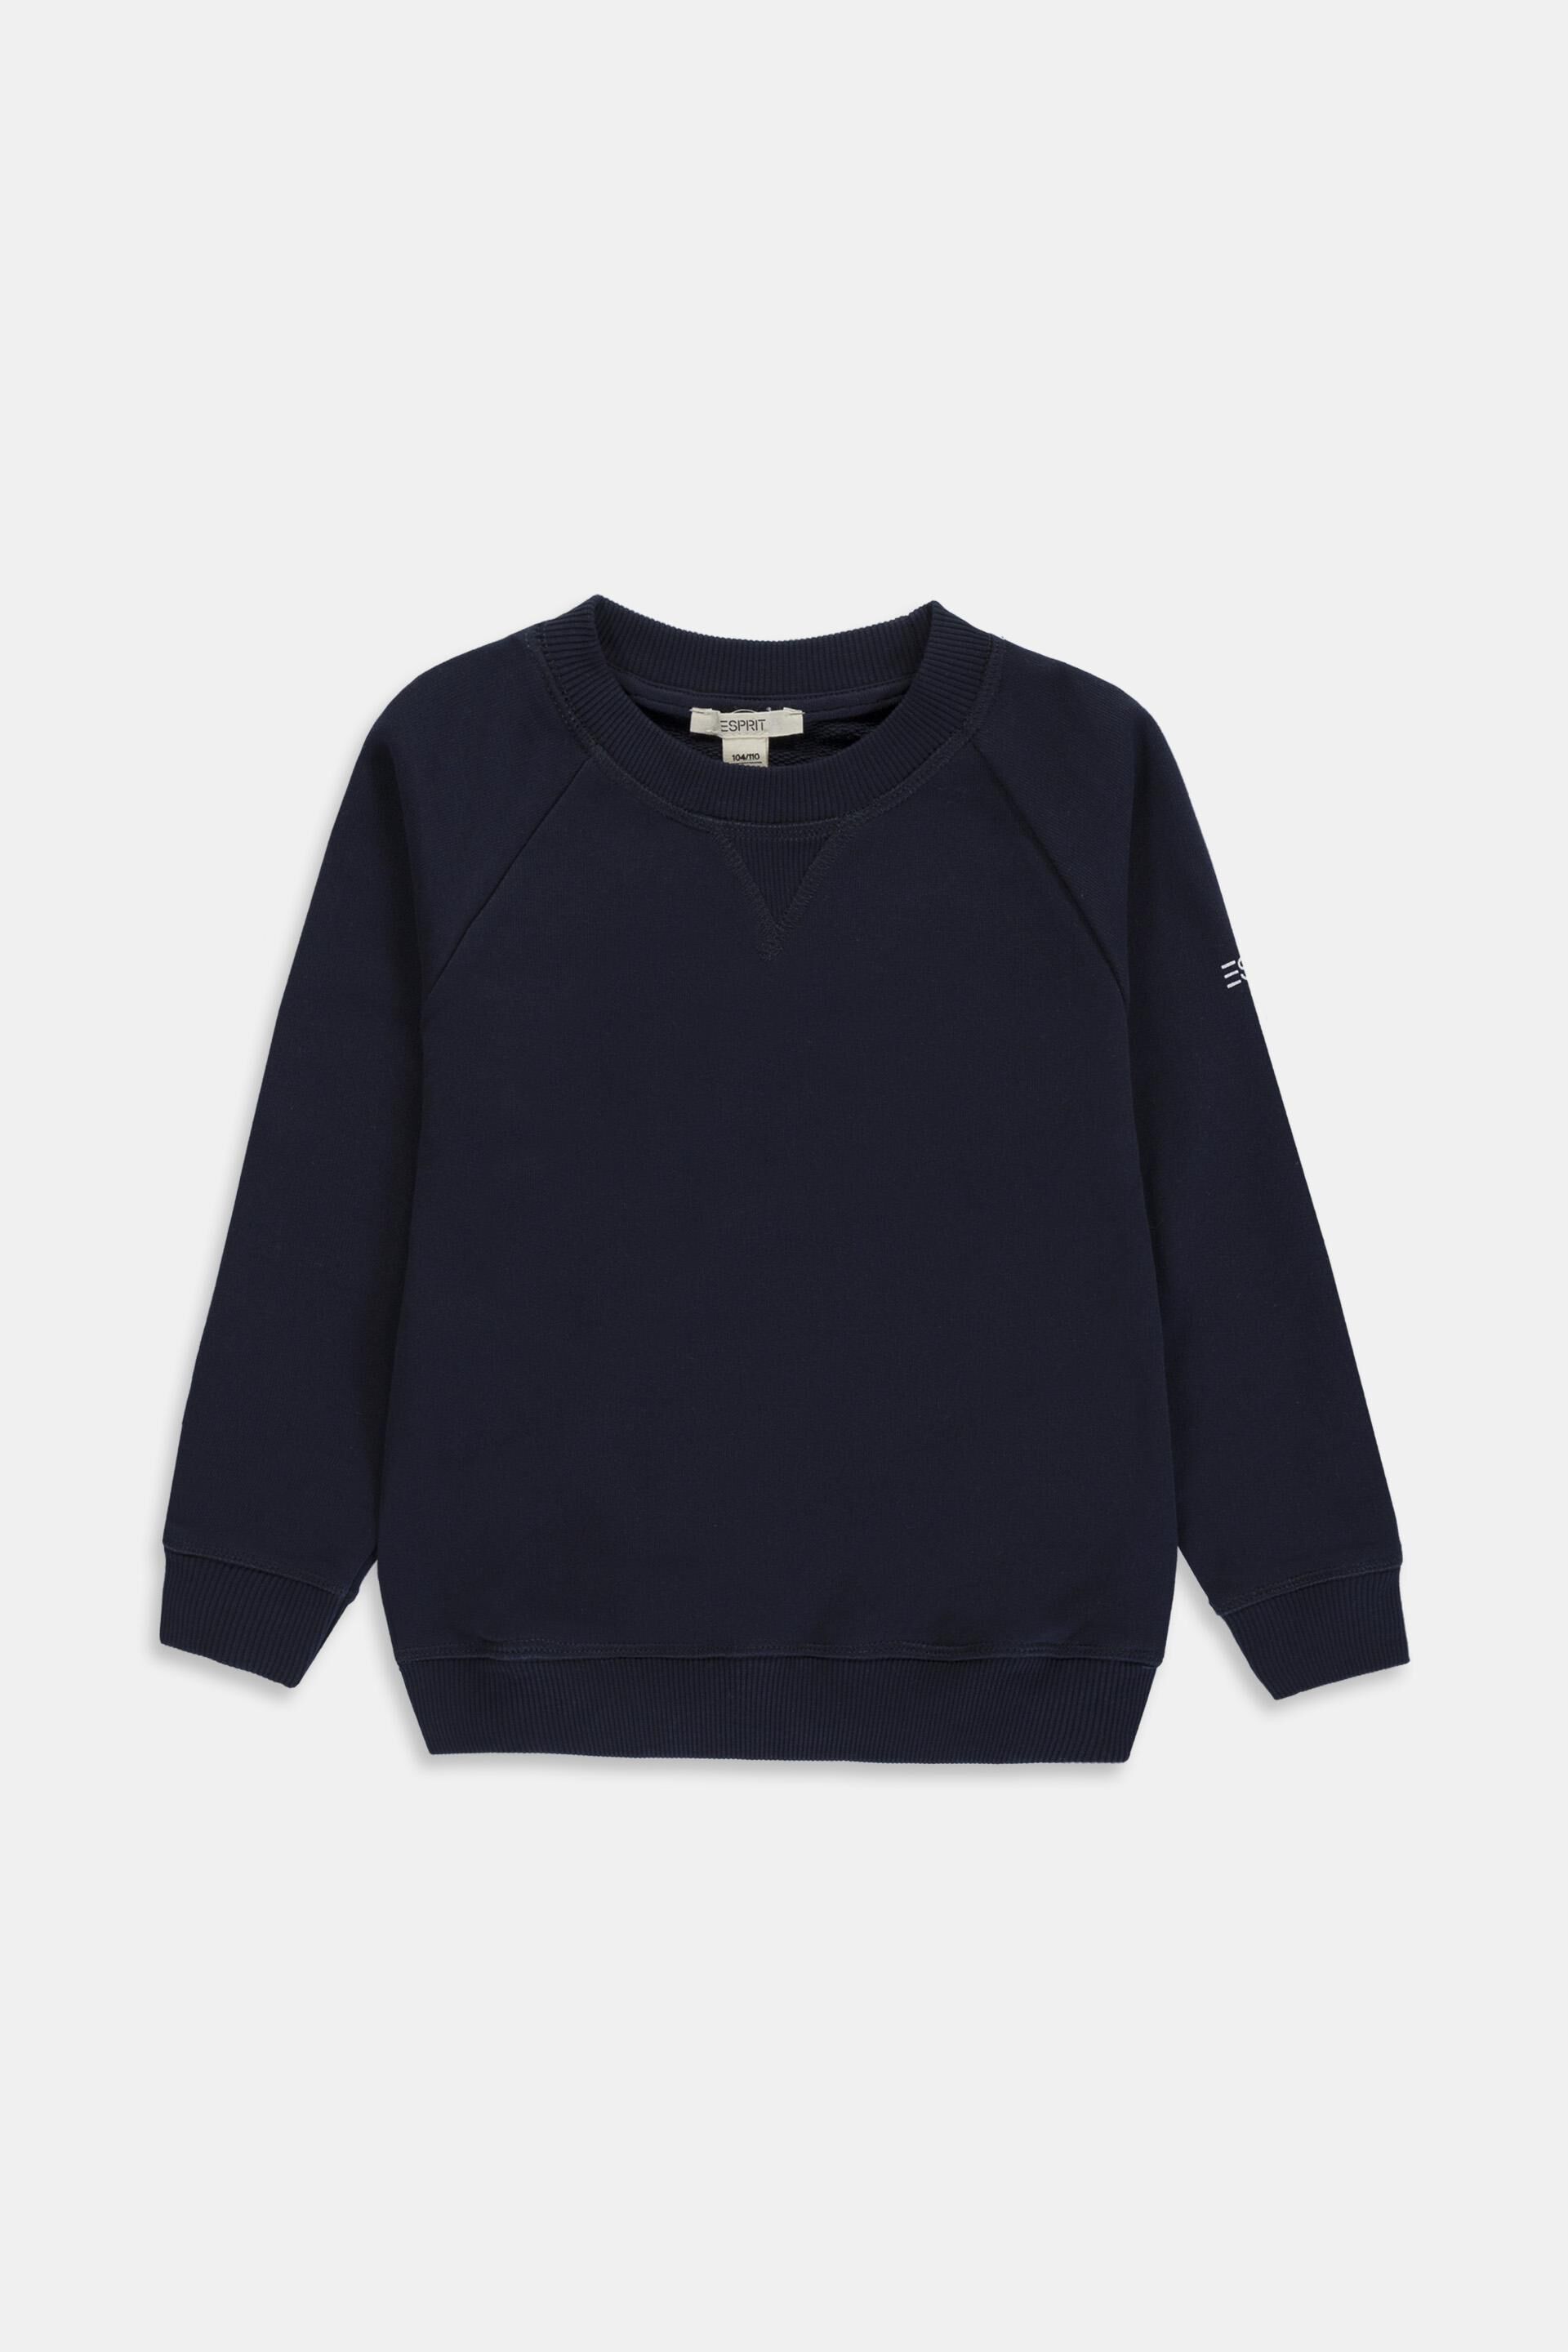 Esprit of cotton with made logo 100% Sweatshirt